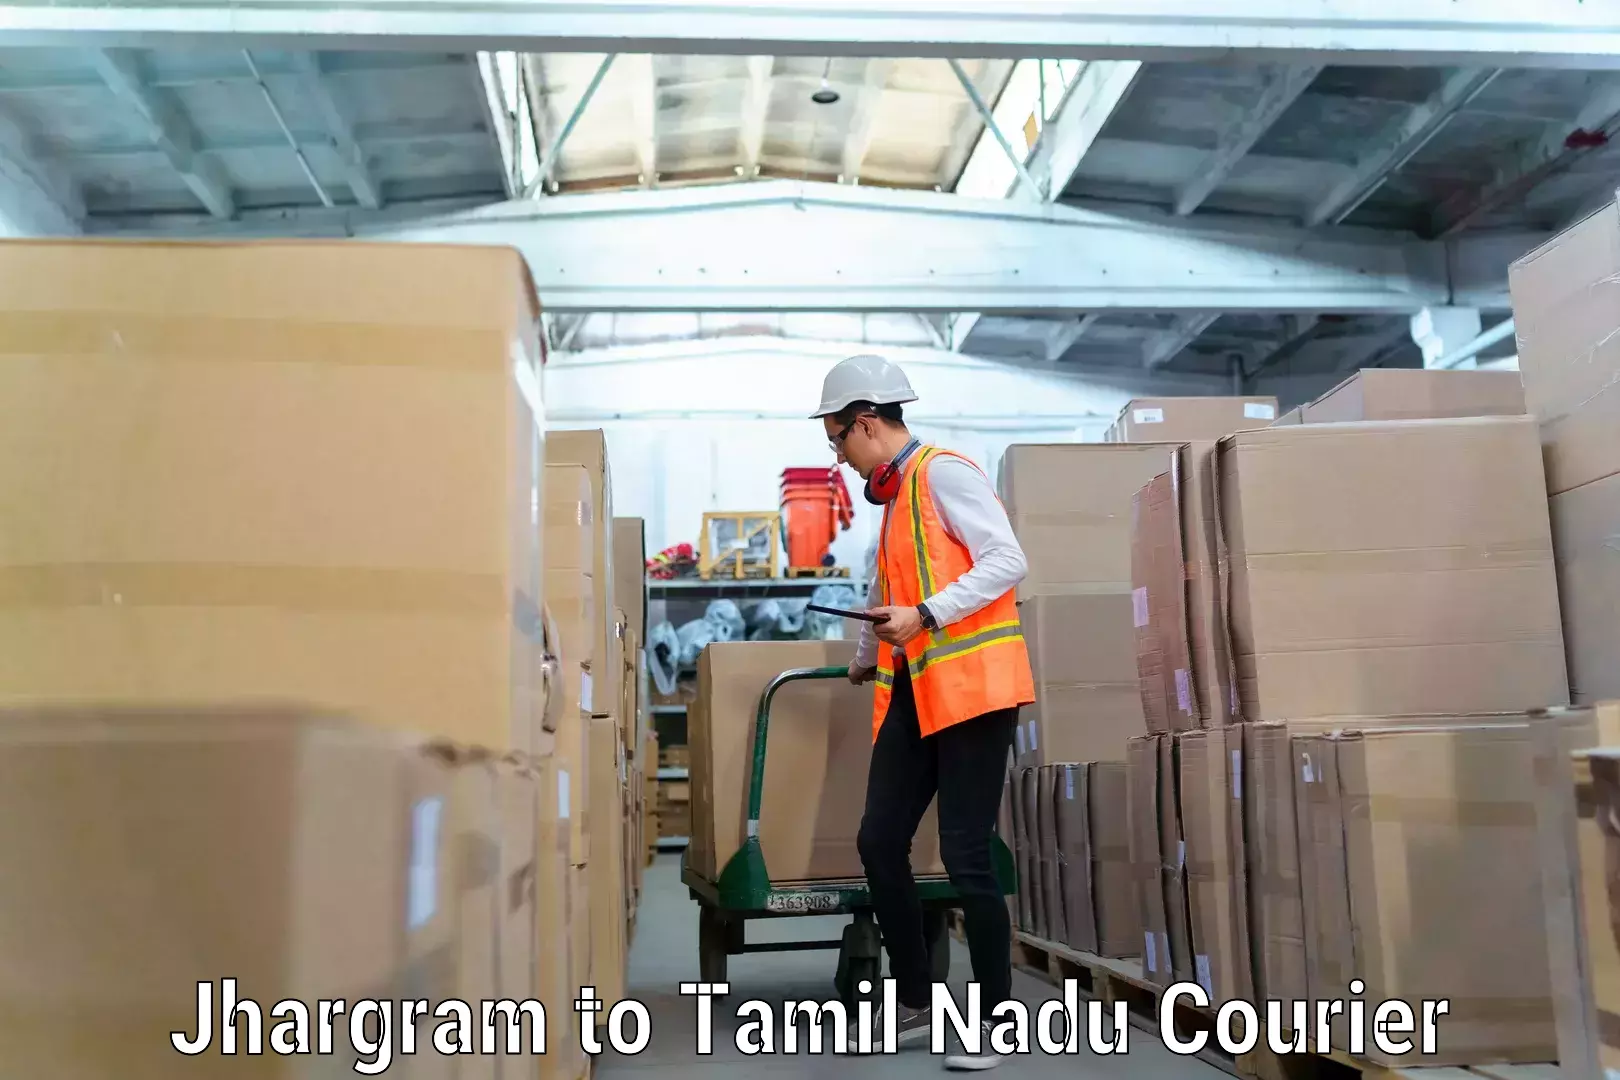 Furniture moving specialists Jhargram to Tamil Nadu